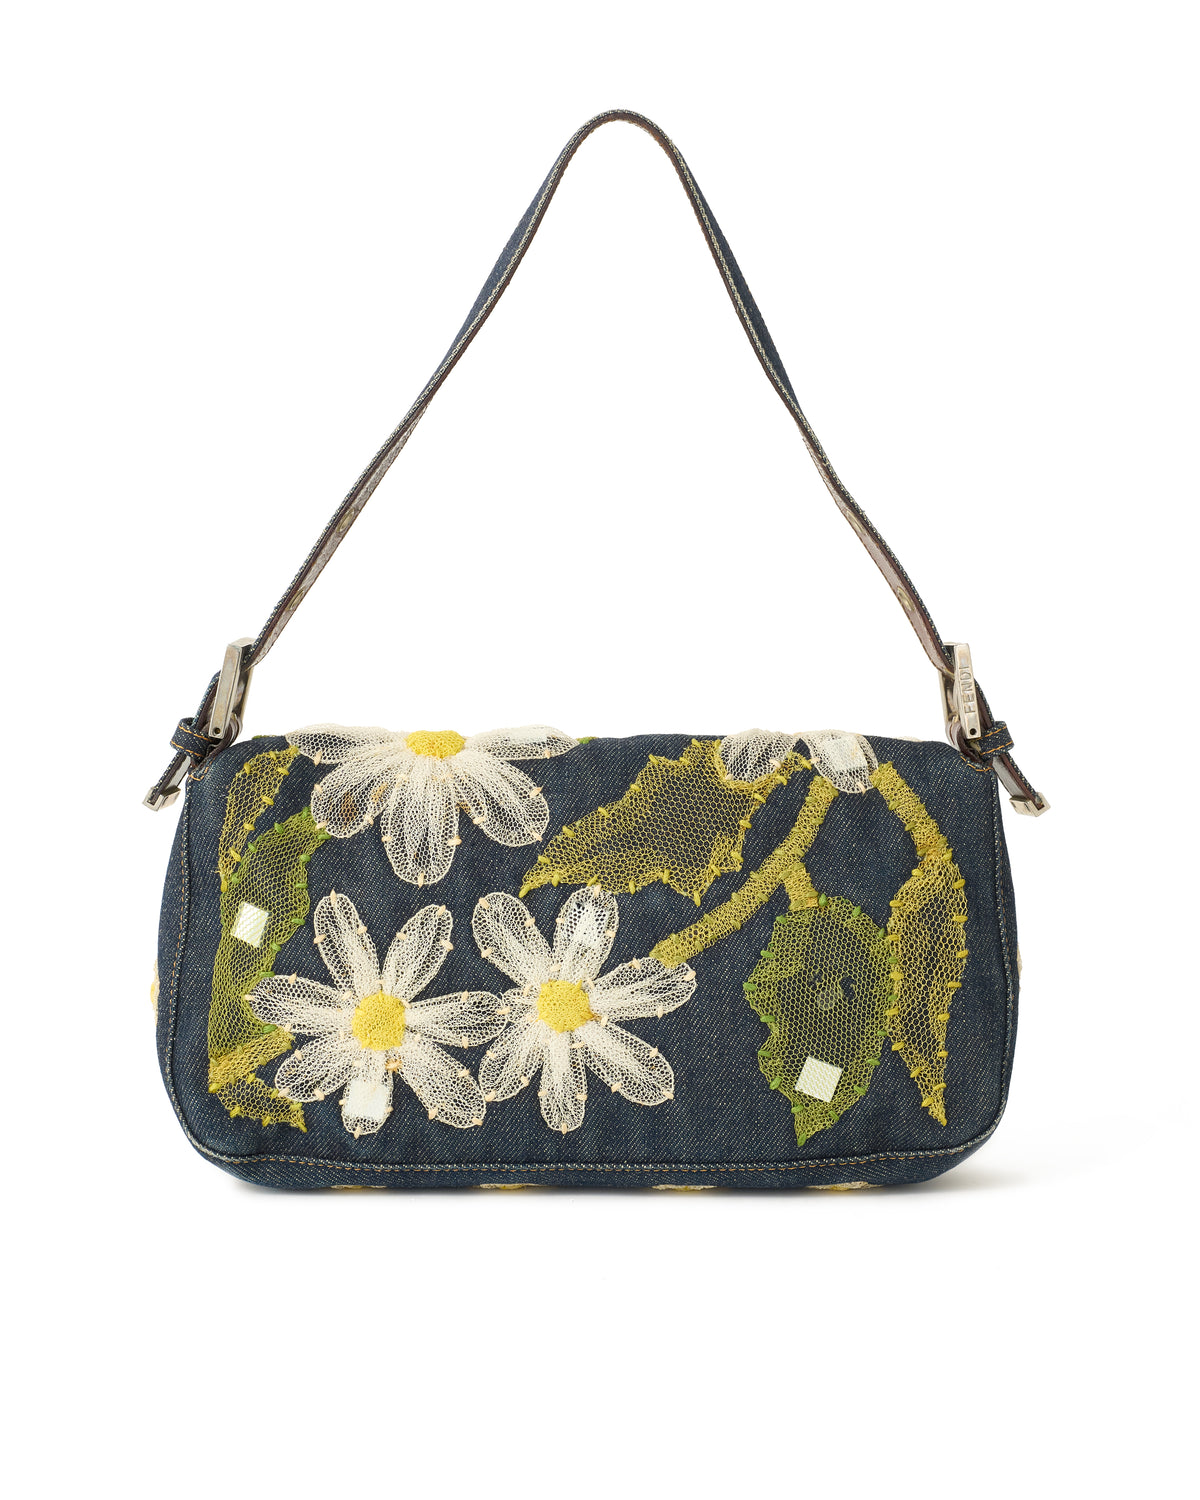 Pre-Owned Fendi Floral Baguette Bag